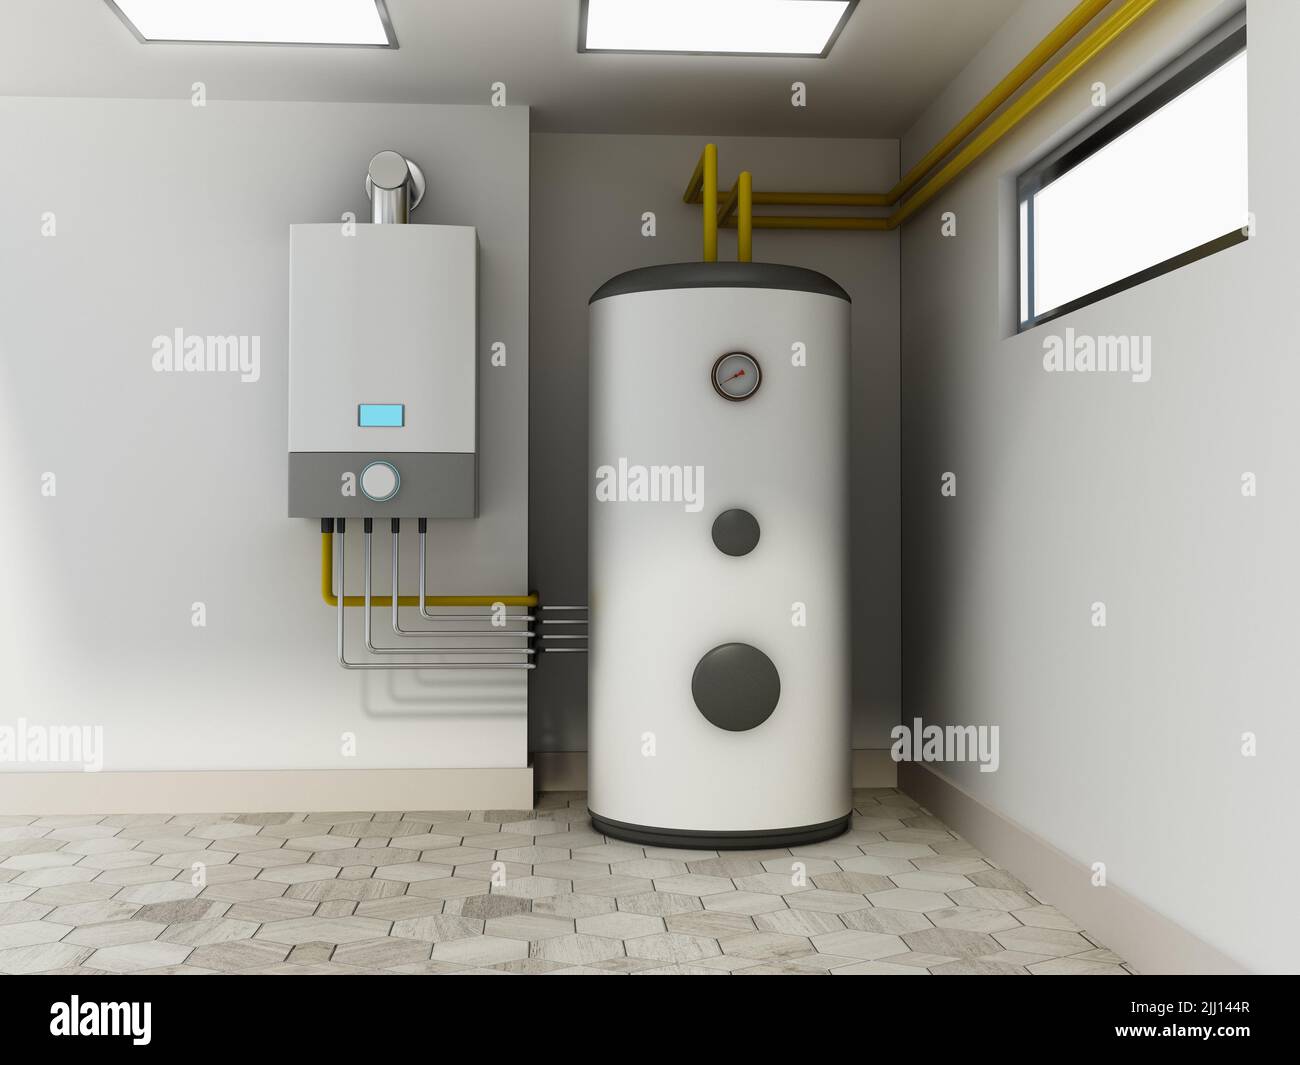 Calentadores de agua eléctricos conectados con tuberías de agua industriales. Ilustración 3D. Foto de stock